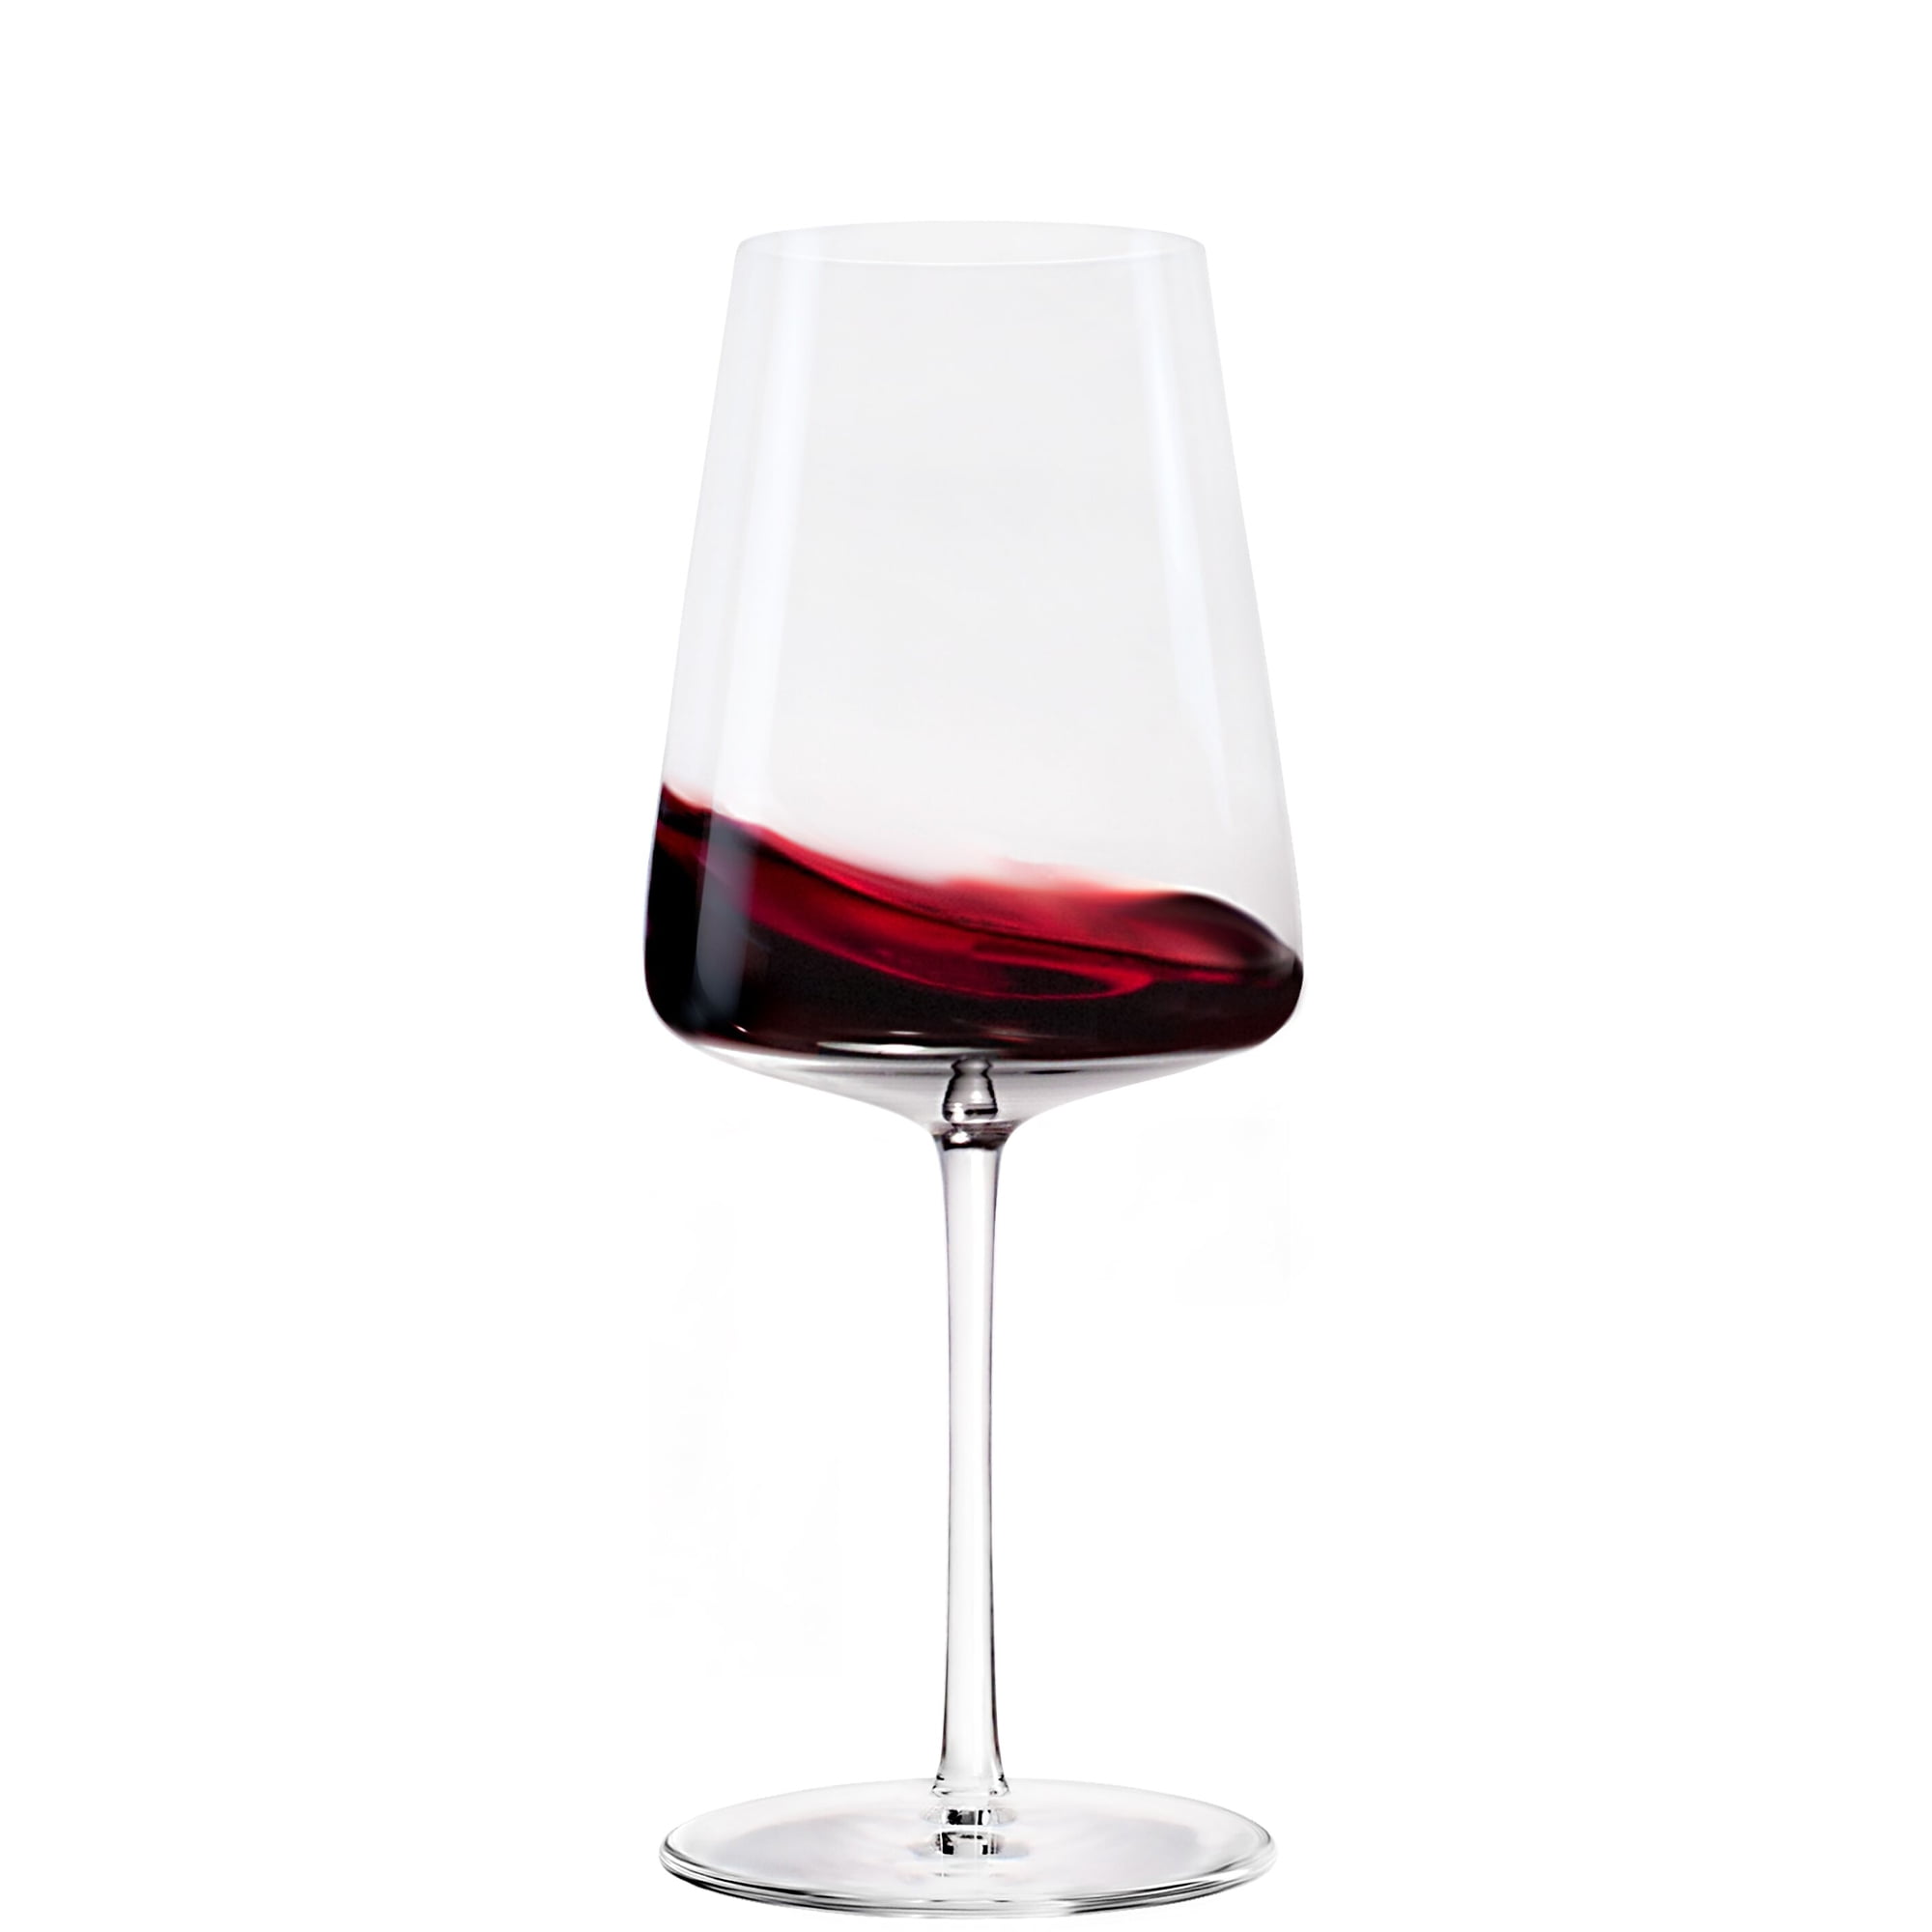 Stolzle Lausitz Power German Made Crystal White Wine Glass, Set of 4 